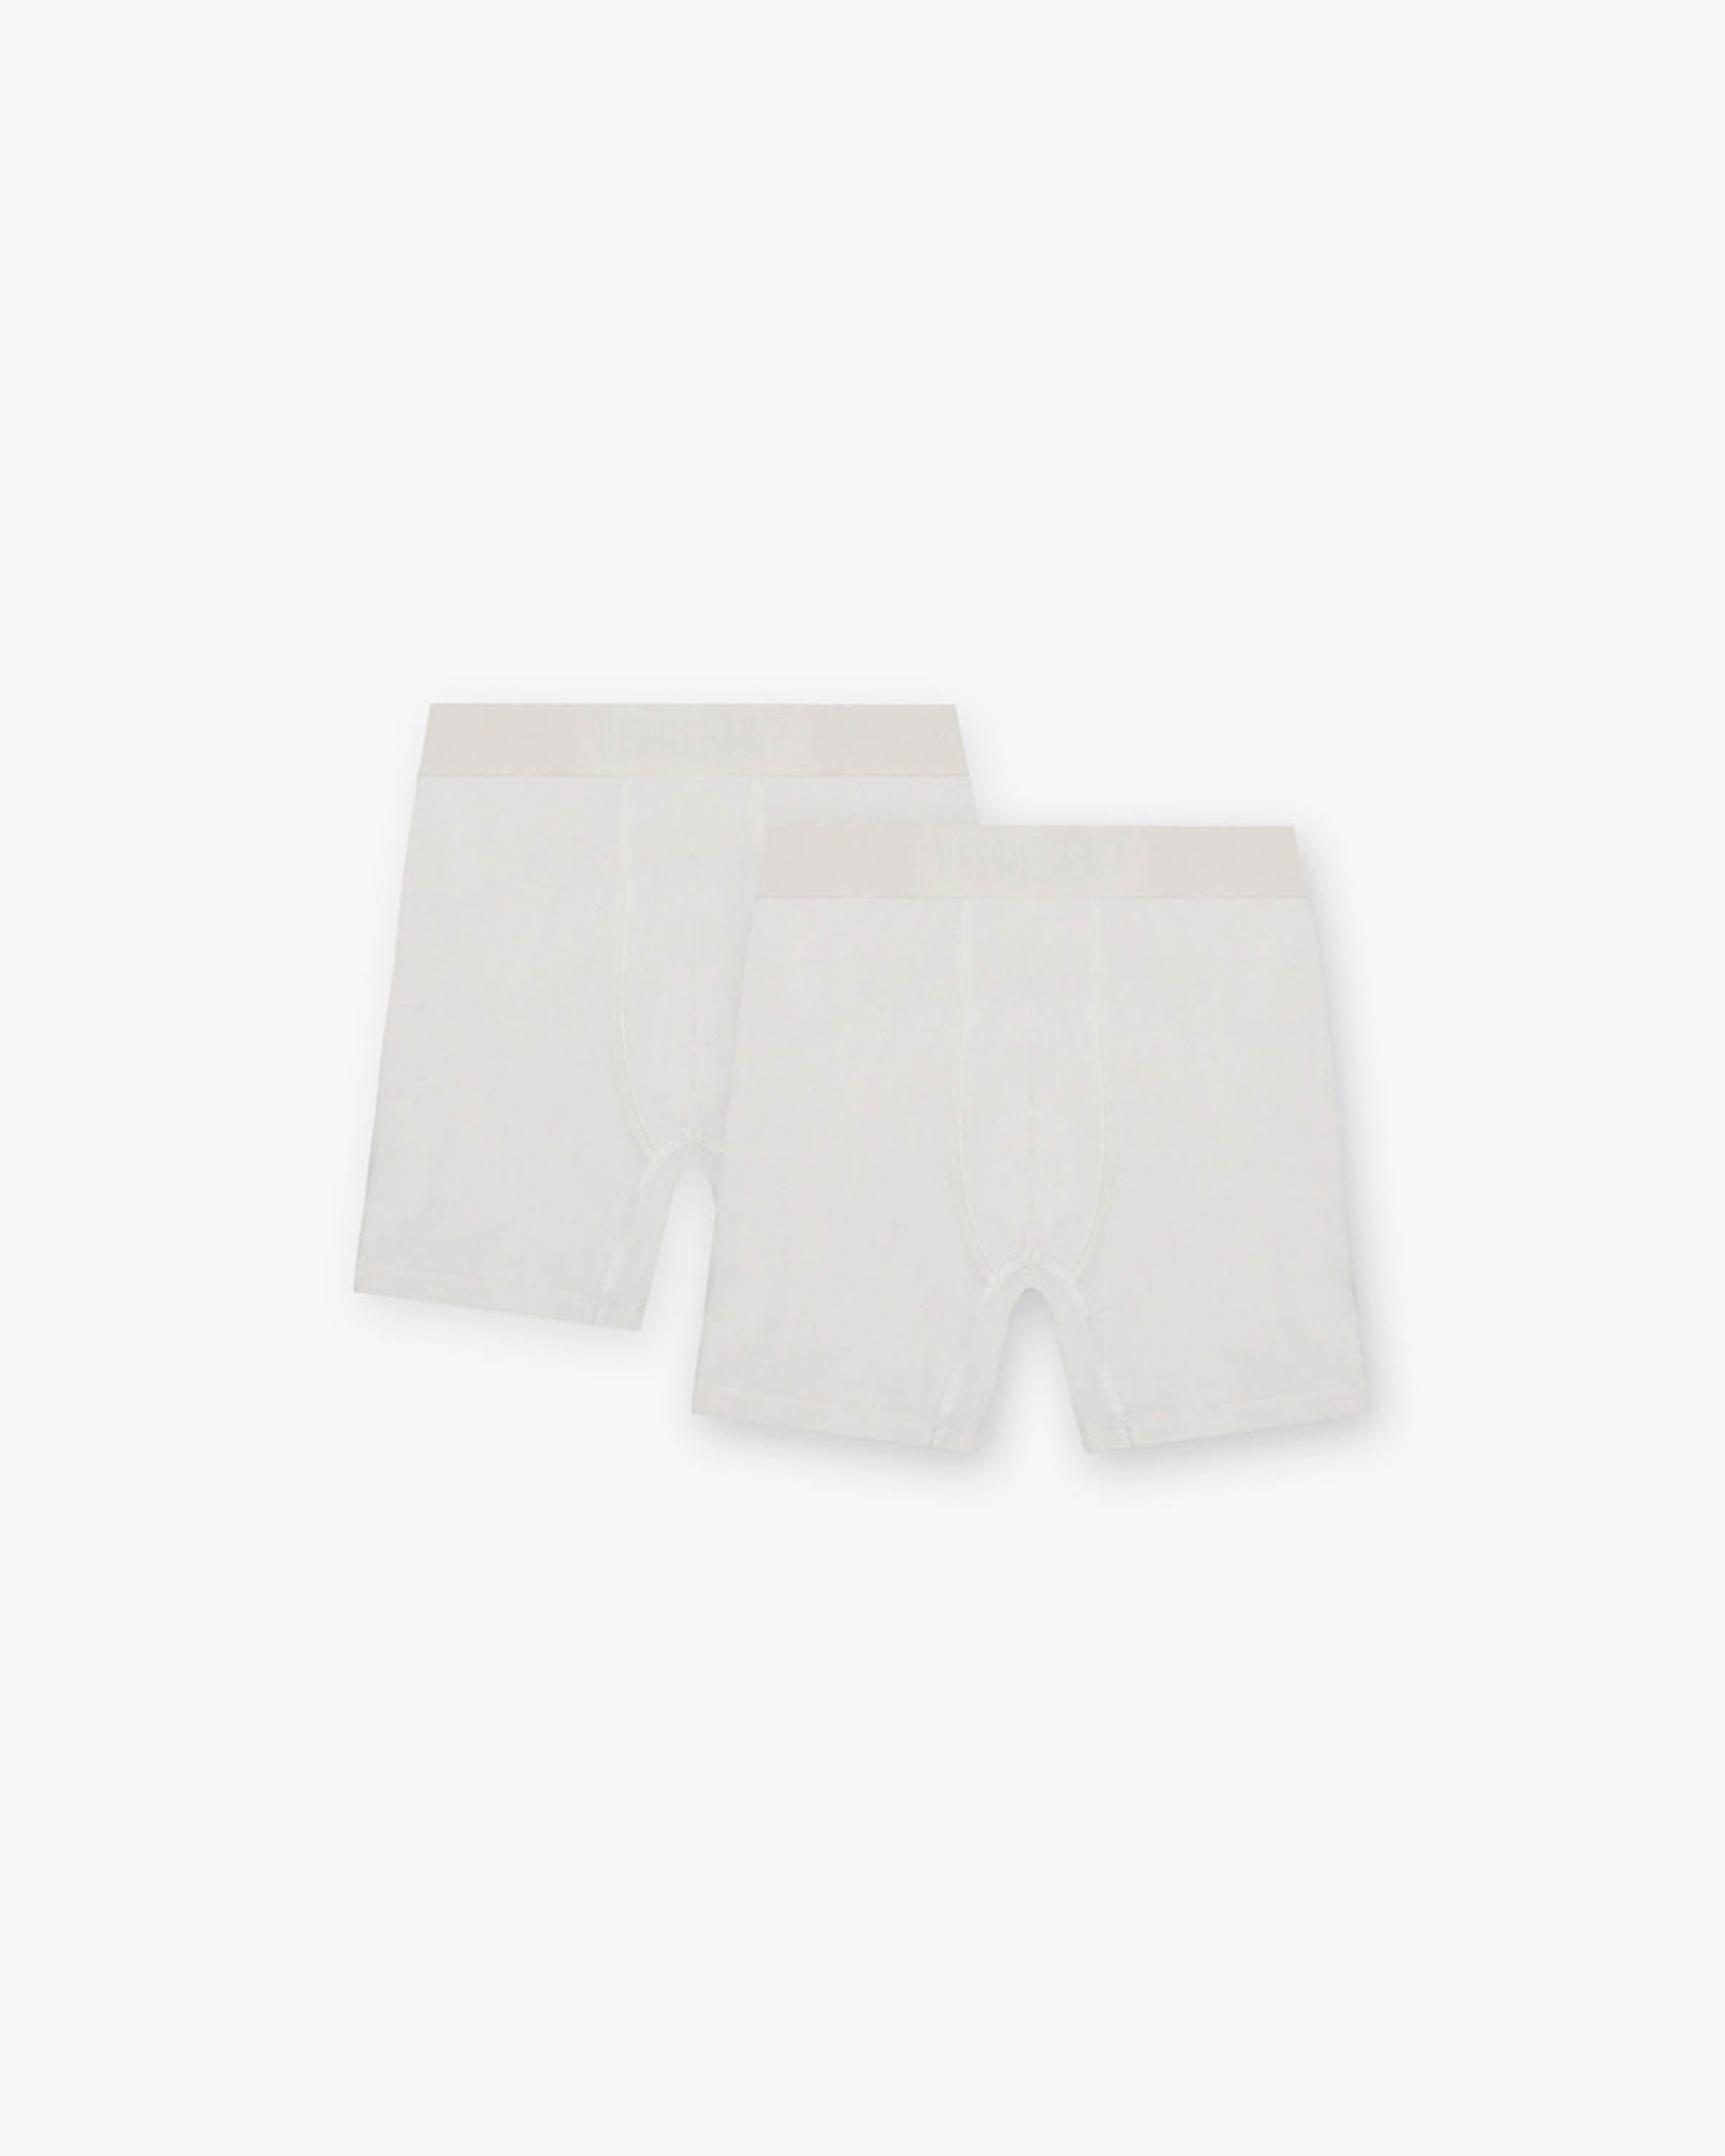 Represent Boxers 2 Pack - Triple Flat White